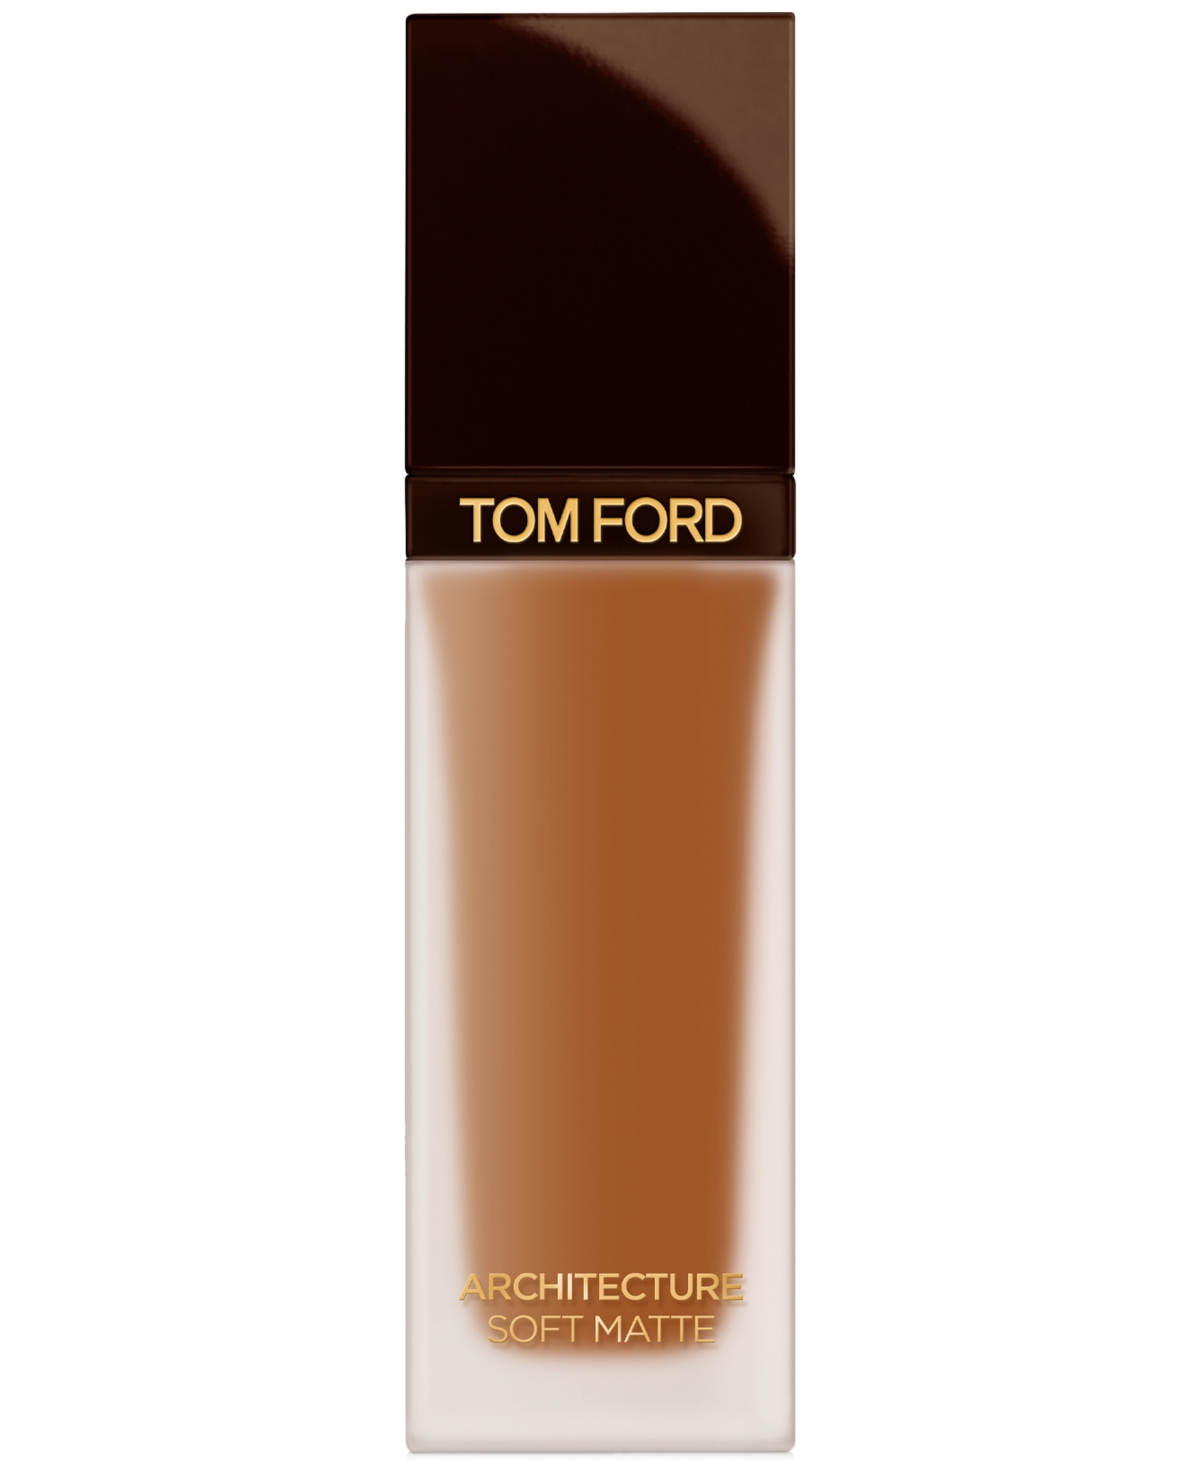 Shop Tom Ford Architecture Soft Matte Blurring Foundation In . Warm Almond - Deep